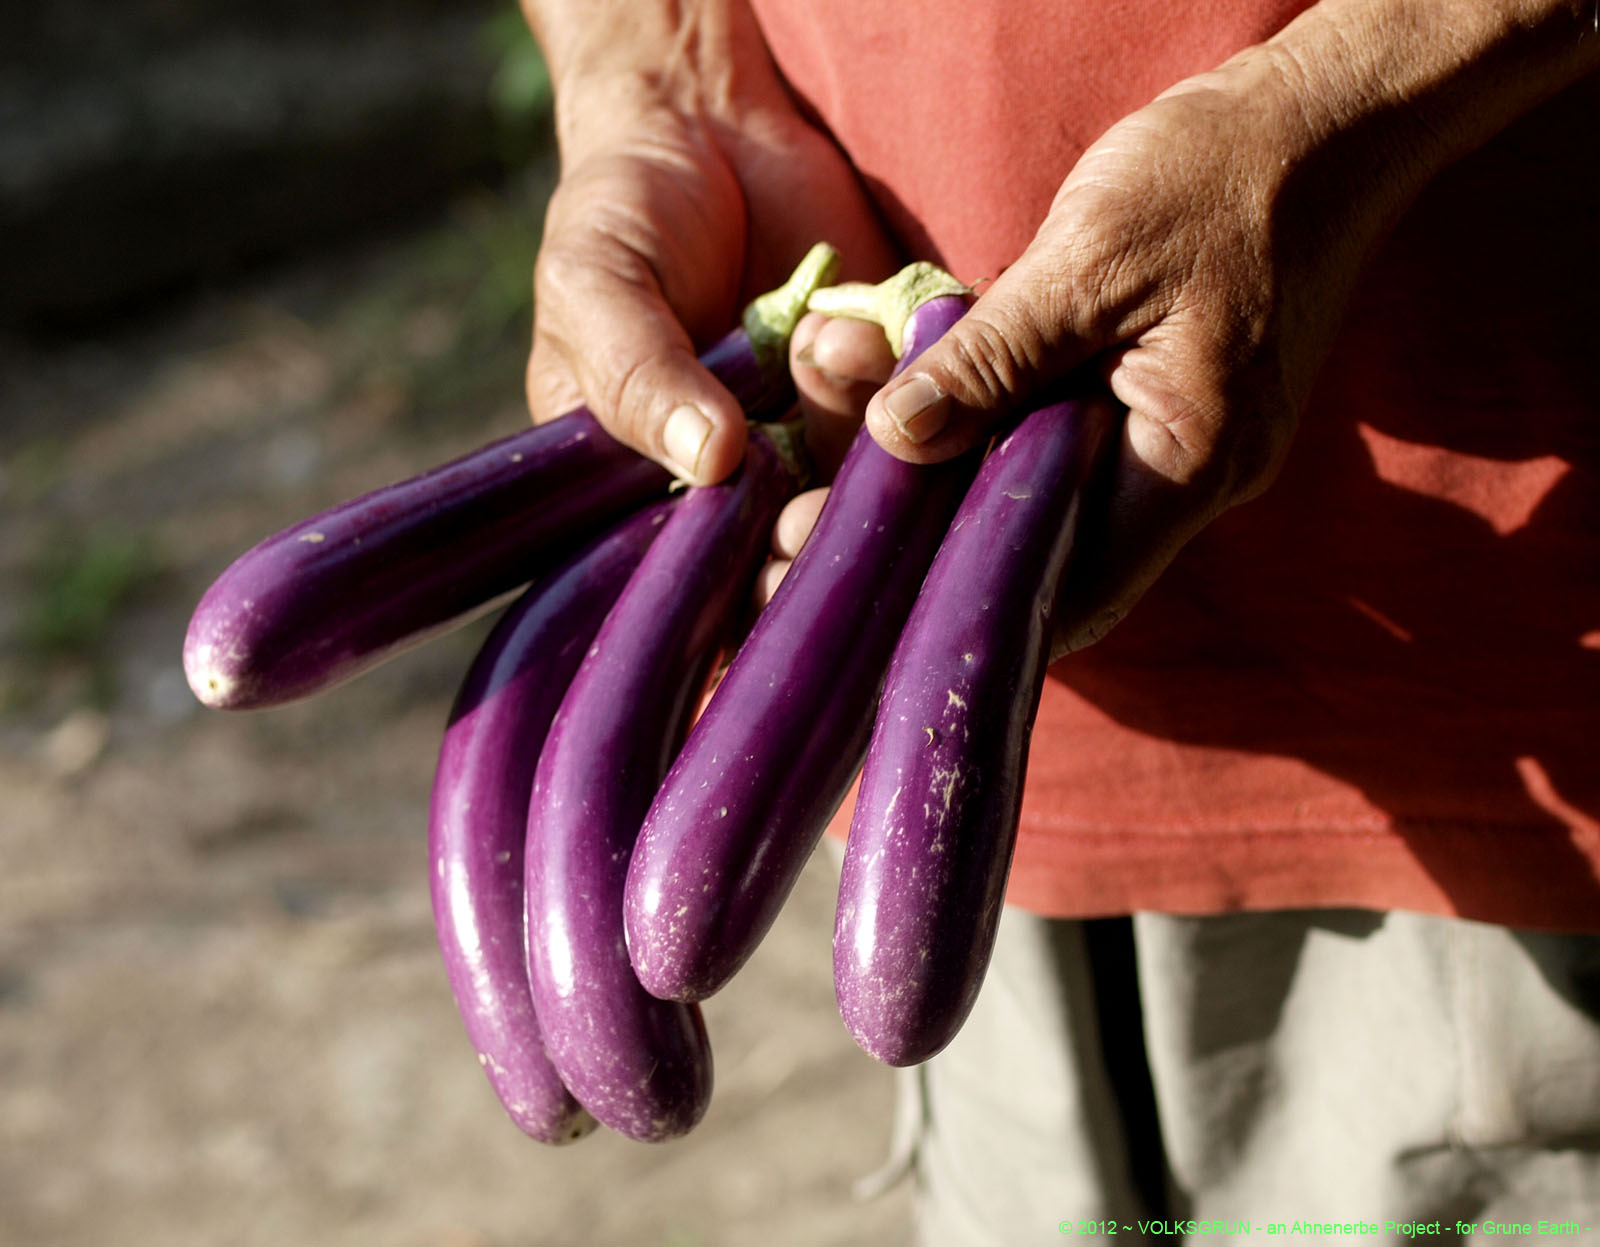 eggplant, aubergine, melongene, brinjal or guinea squash (Solanum melongena)